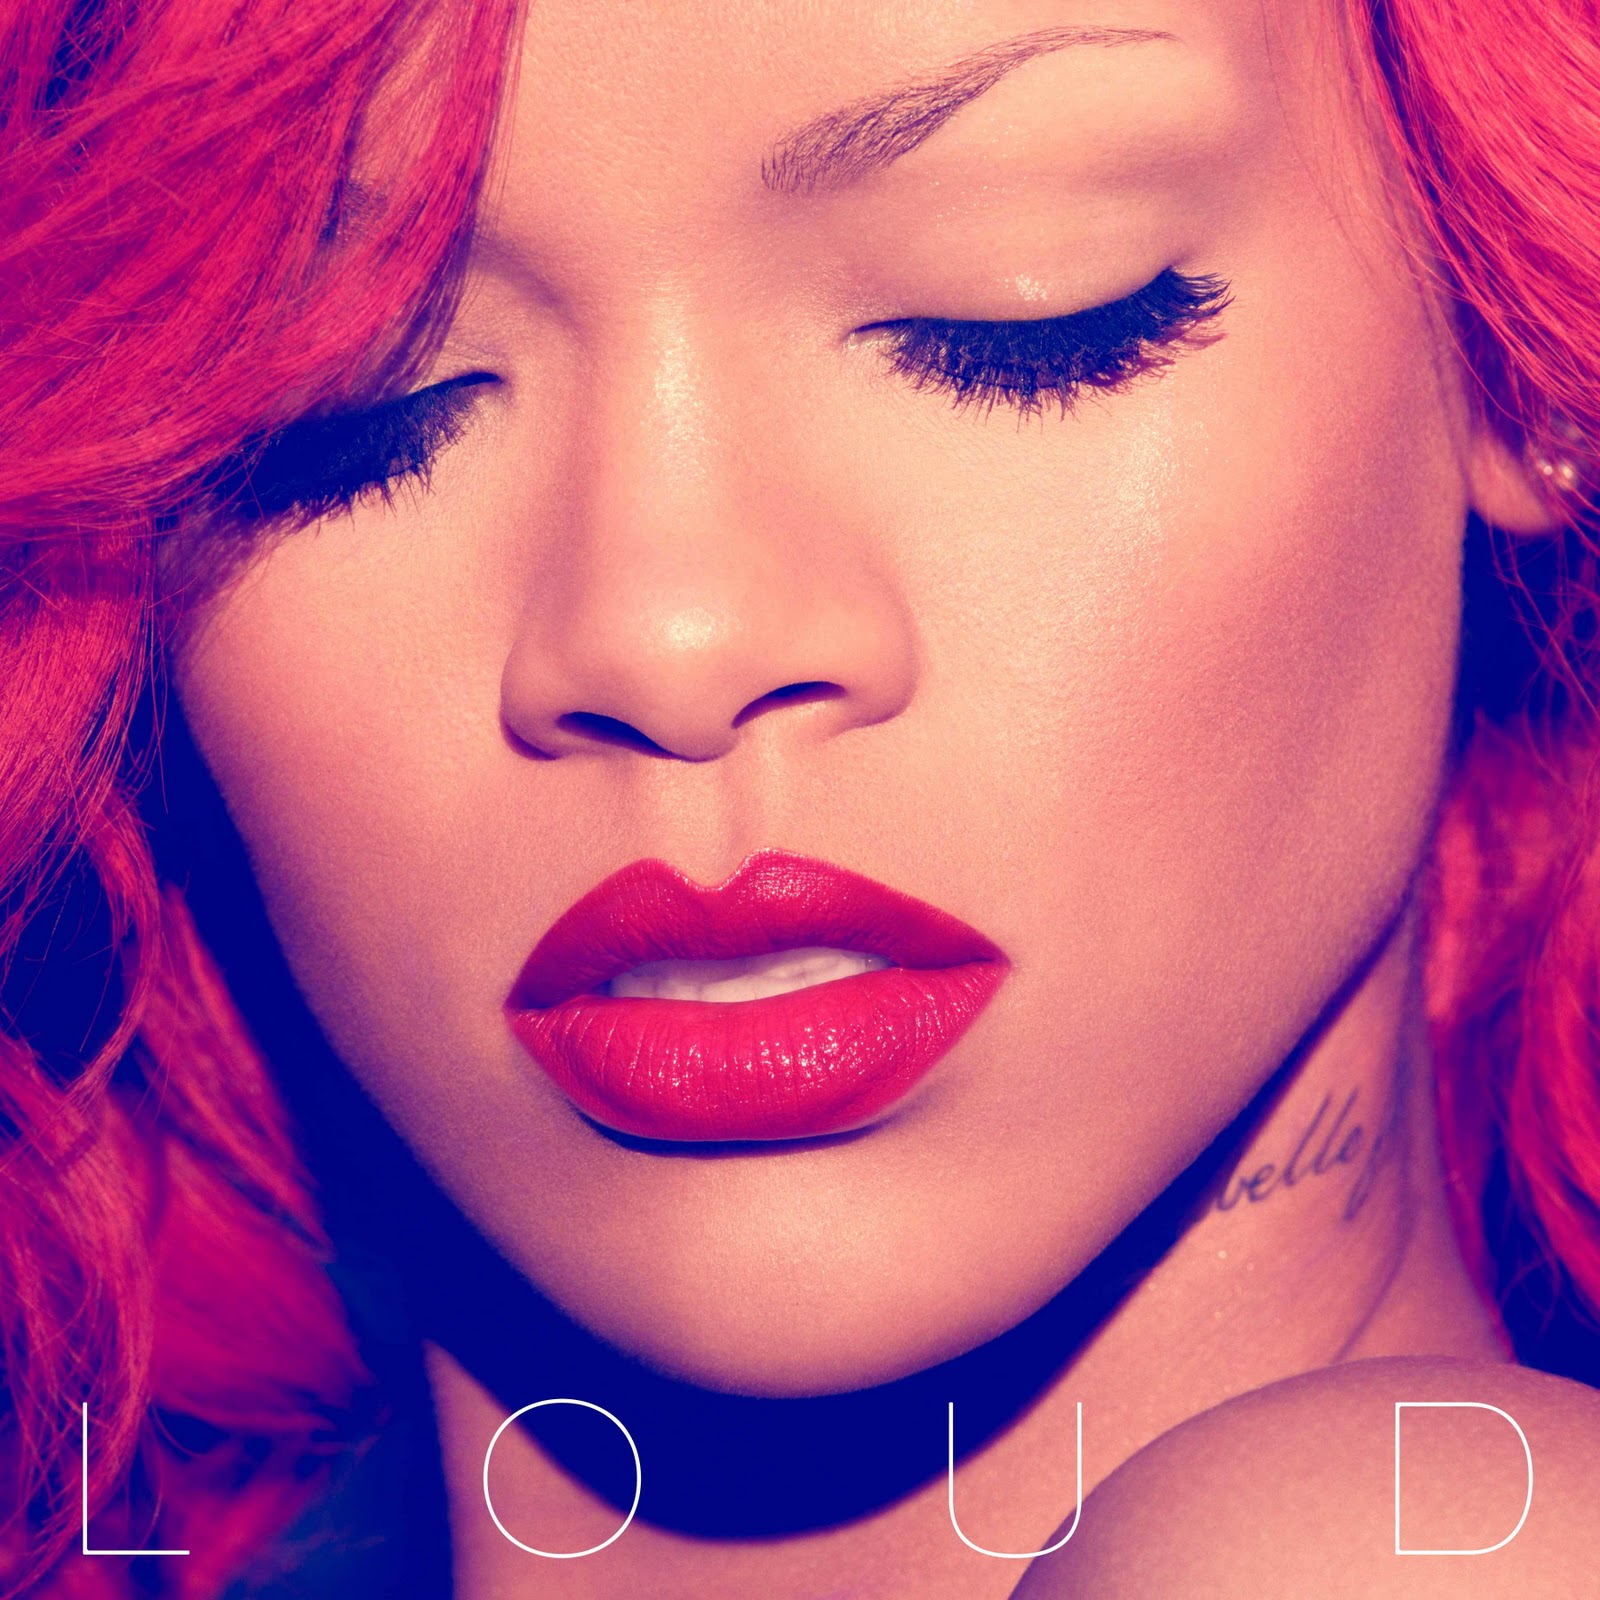 http://2.bp.blogspot.com/_ALNcsPR9414/TNNoVuL-R_I/AAAAAAAABTQ/aEkS4S_bINQ/s1600/Rihanna+-+Loud+(Official+Album+Cover).jpg